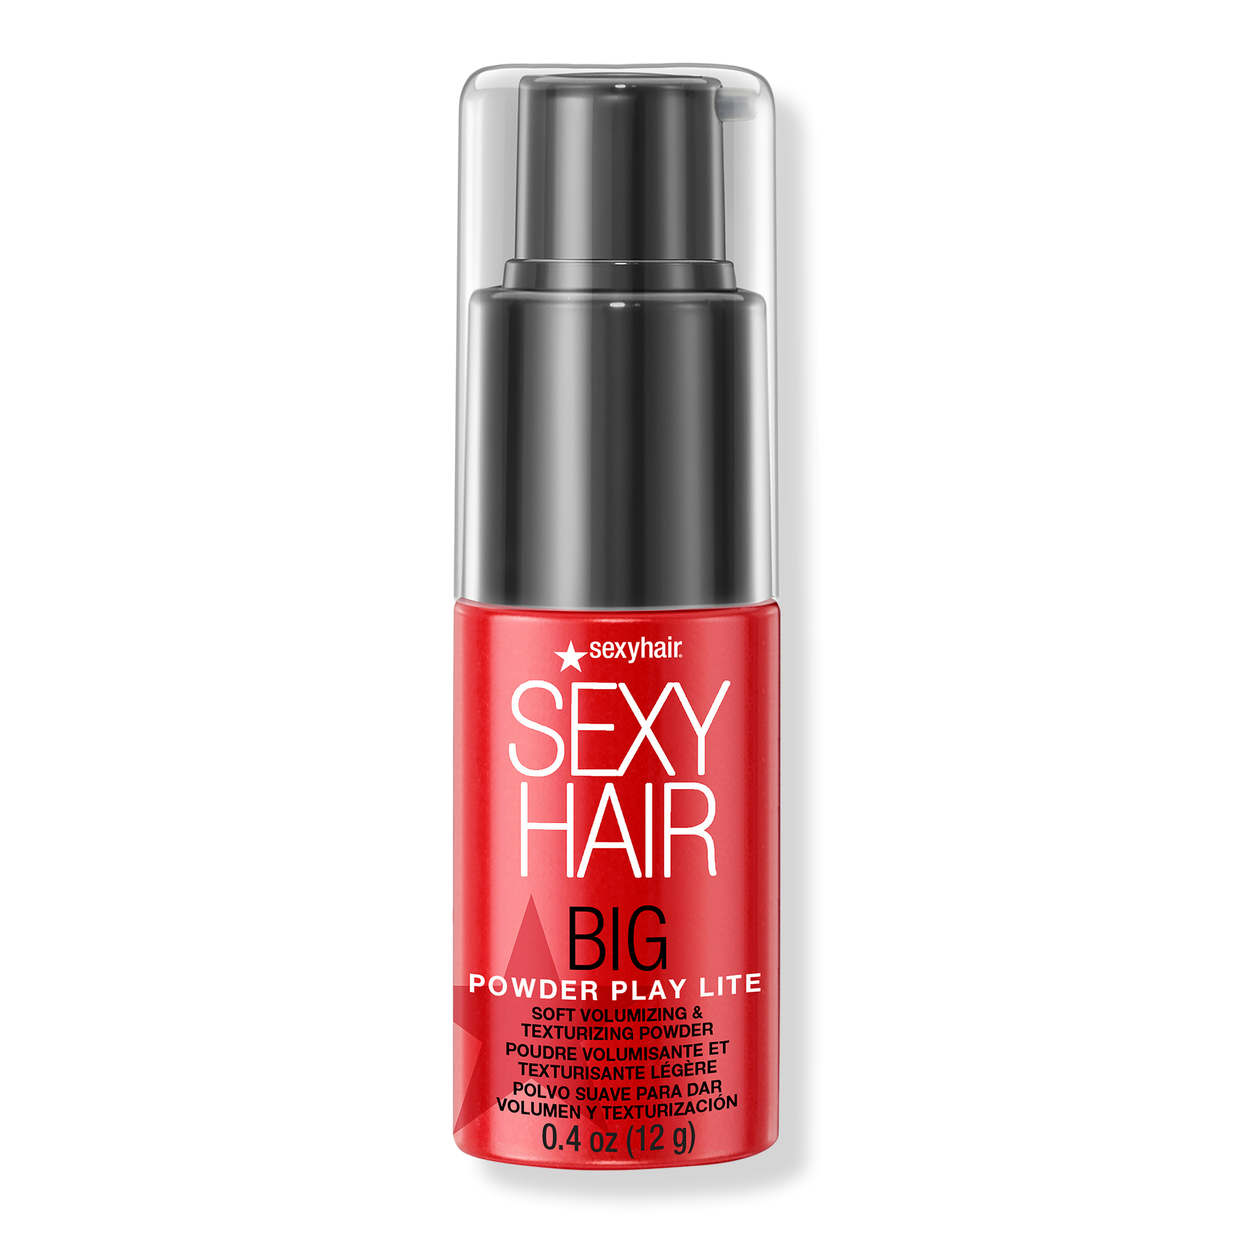 Ulta Big Sexy Hair Powder Play Volumizing & Texturizing Powder